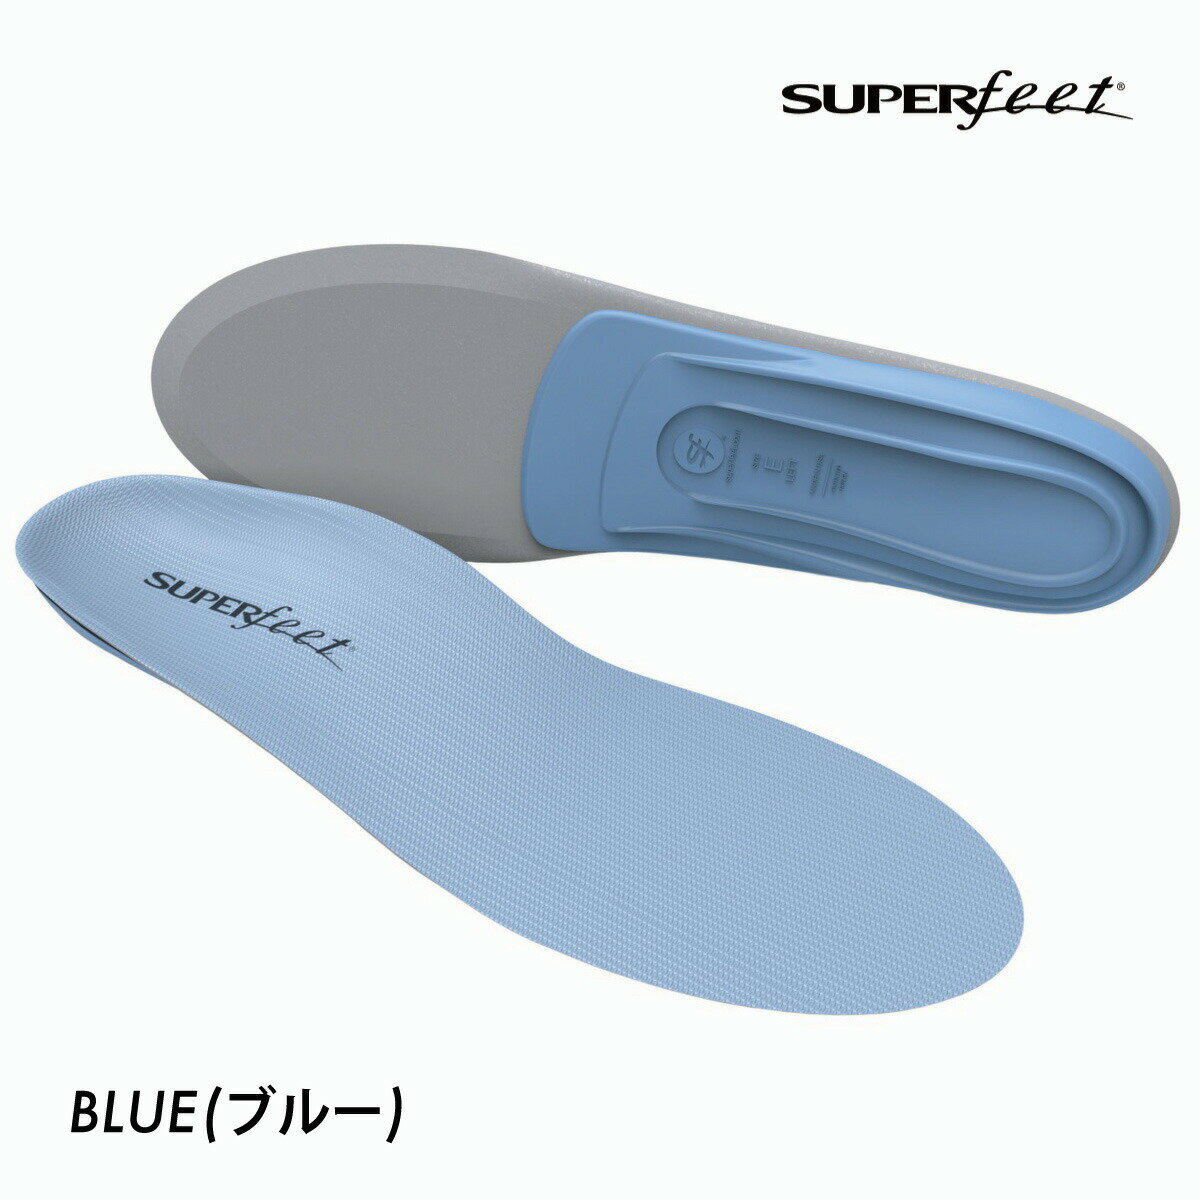 SUPERfeet インソール sf12-24 スーパーフィート IN SOLE 2023FW BLUE (ブルー)